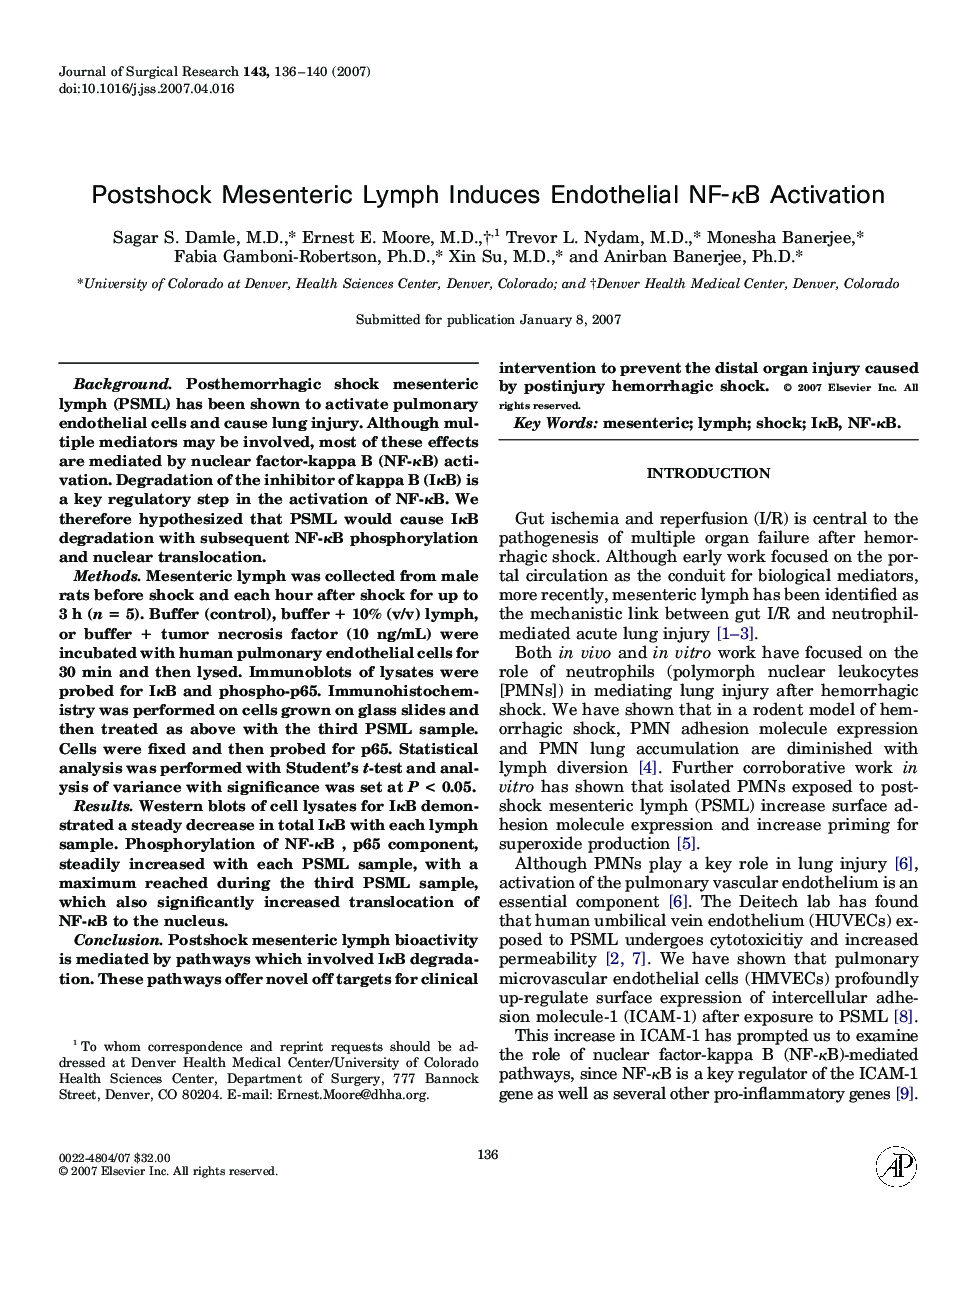 Postshock Mesenteric Lymph Induces Endothelial NF-κB Activation